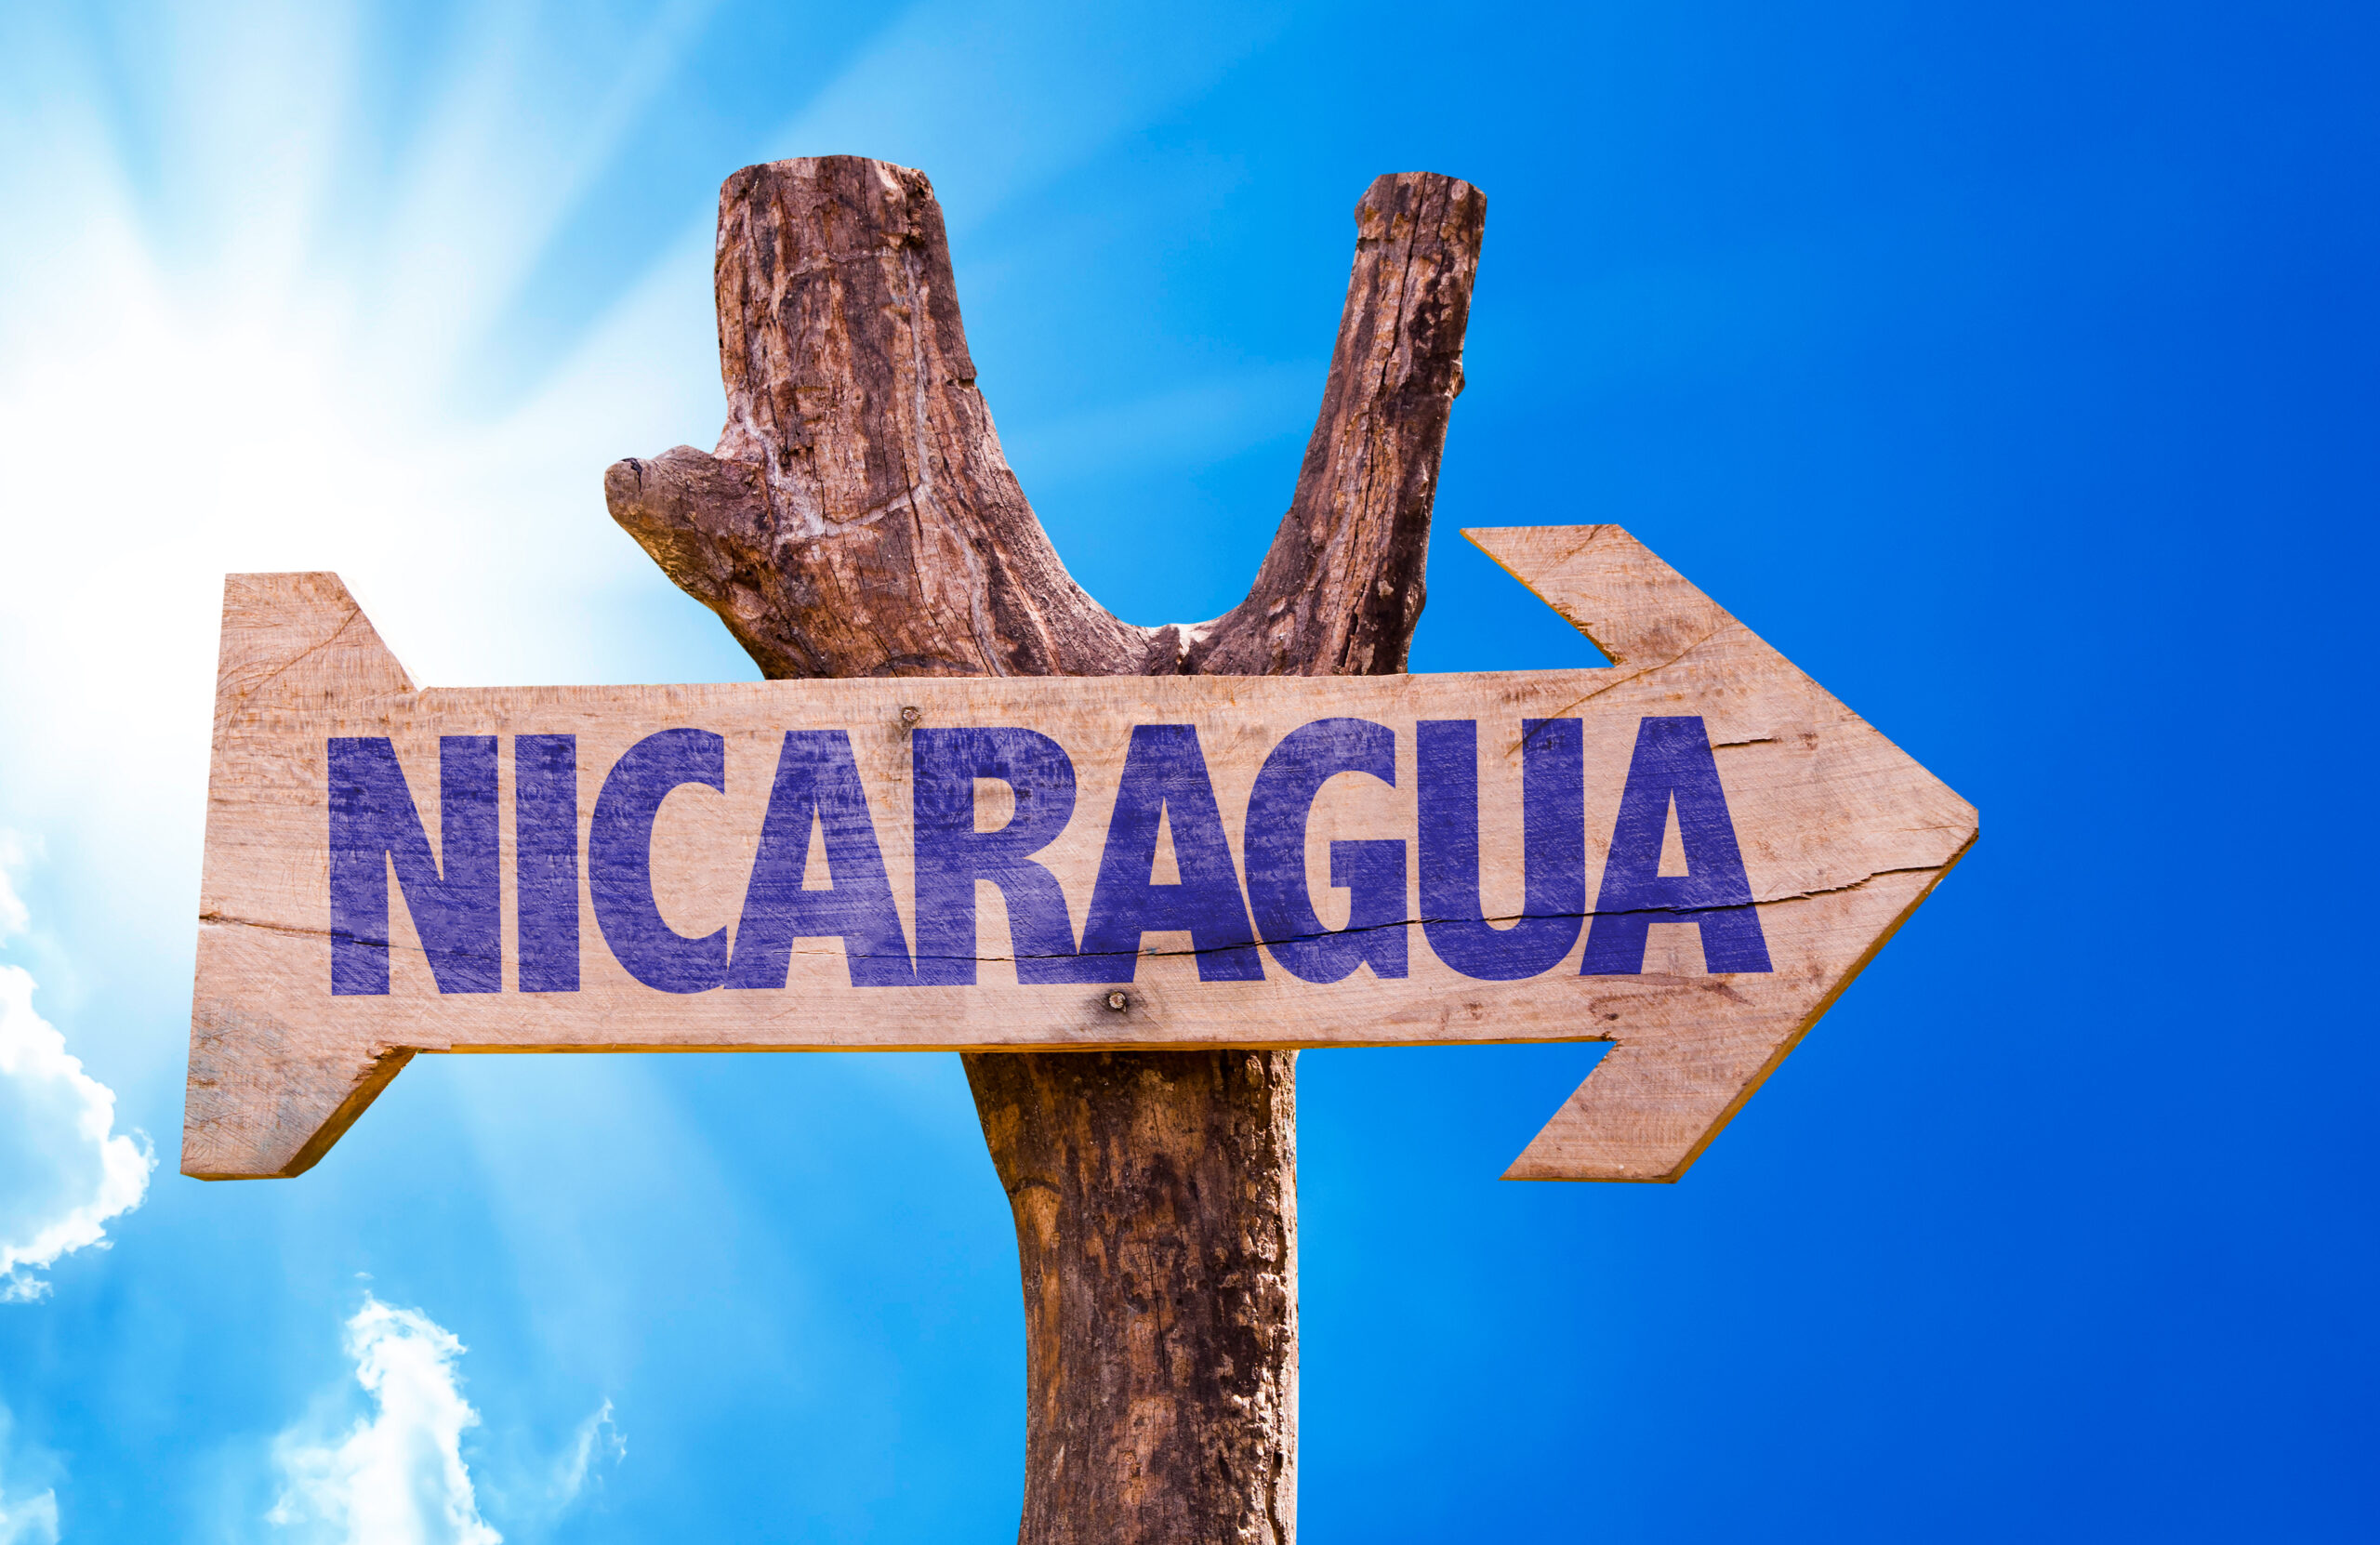 precios de cuba a nicaragua vuelos octubre